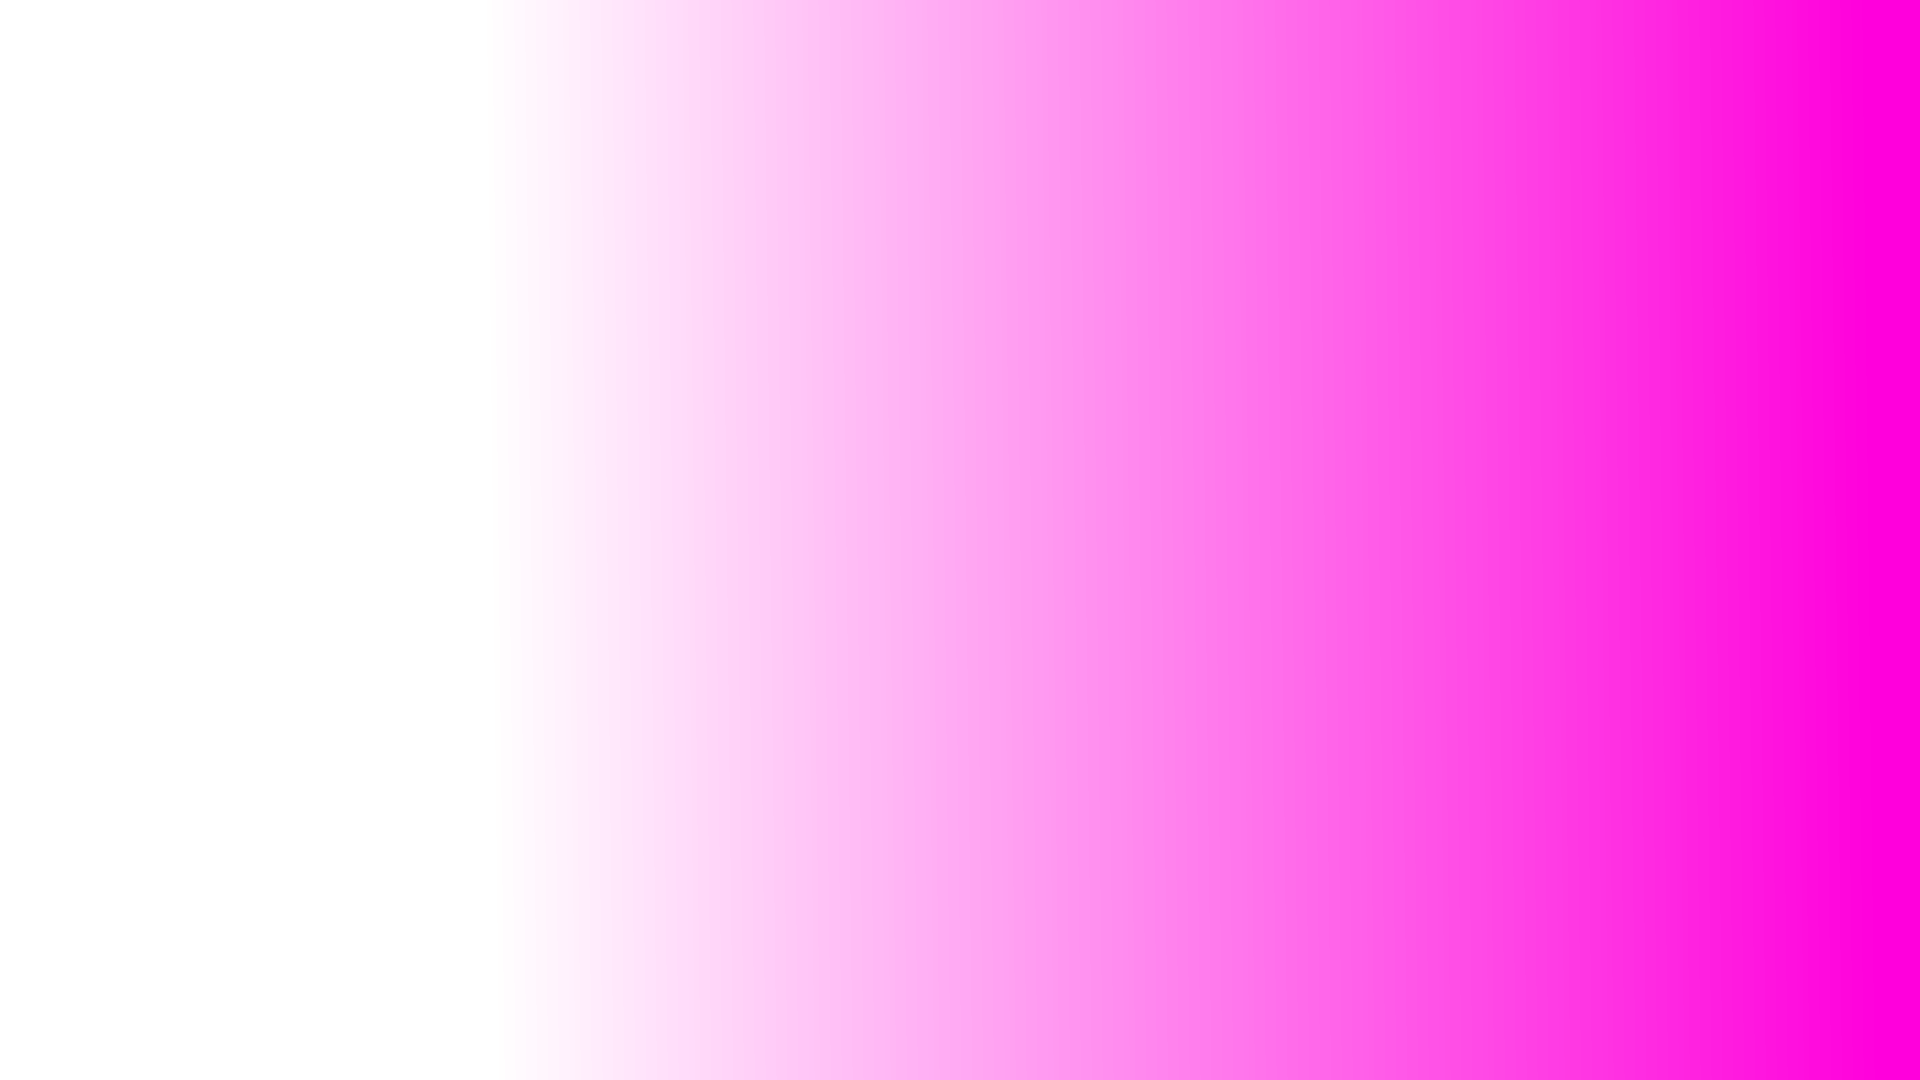 White and Pink Wallpaper - WallpaperSafari